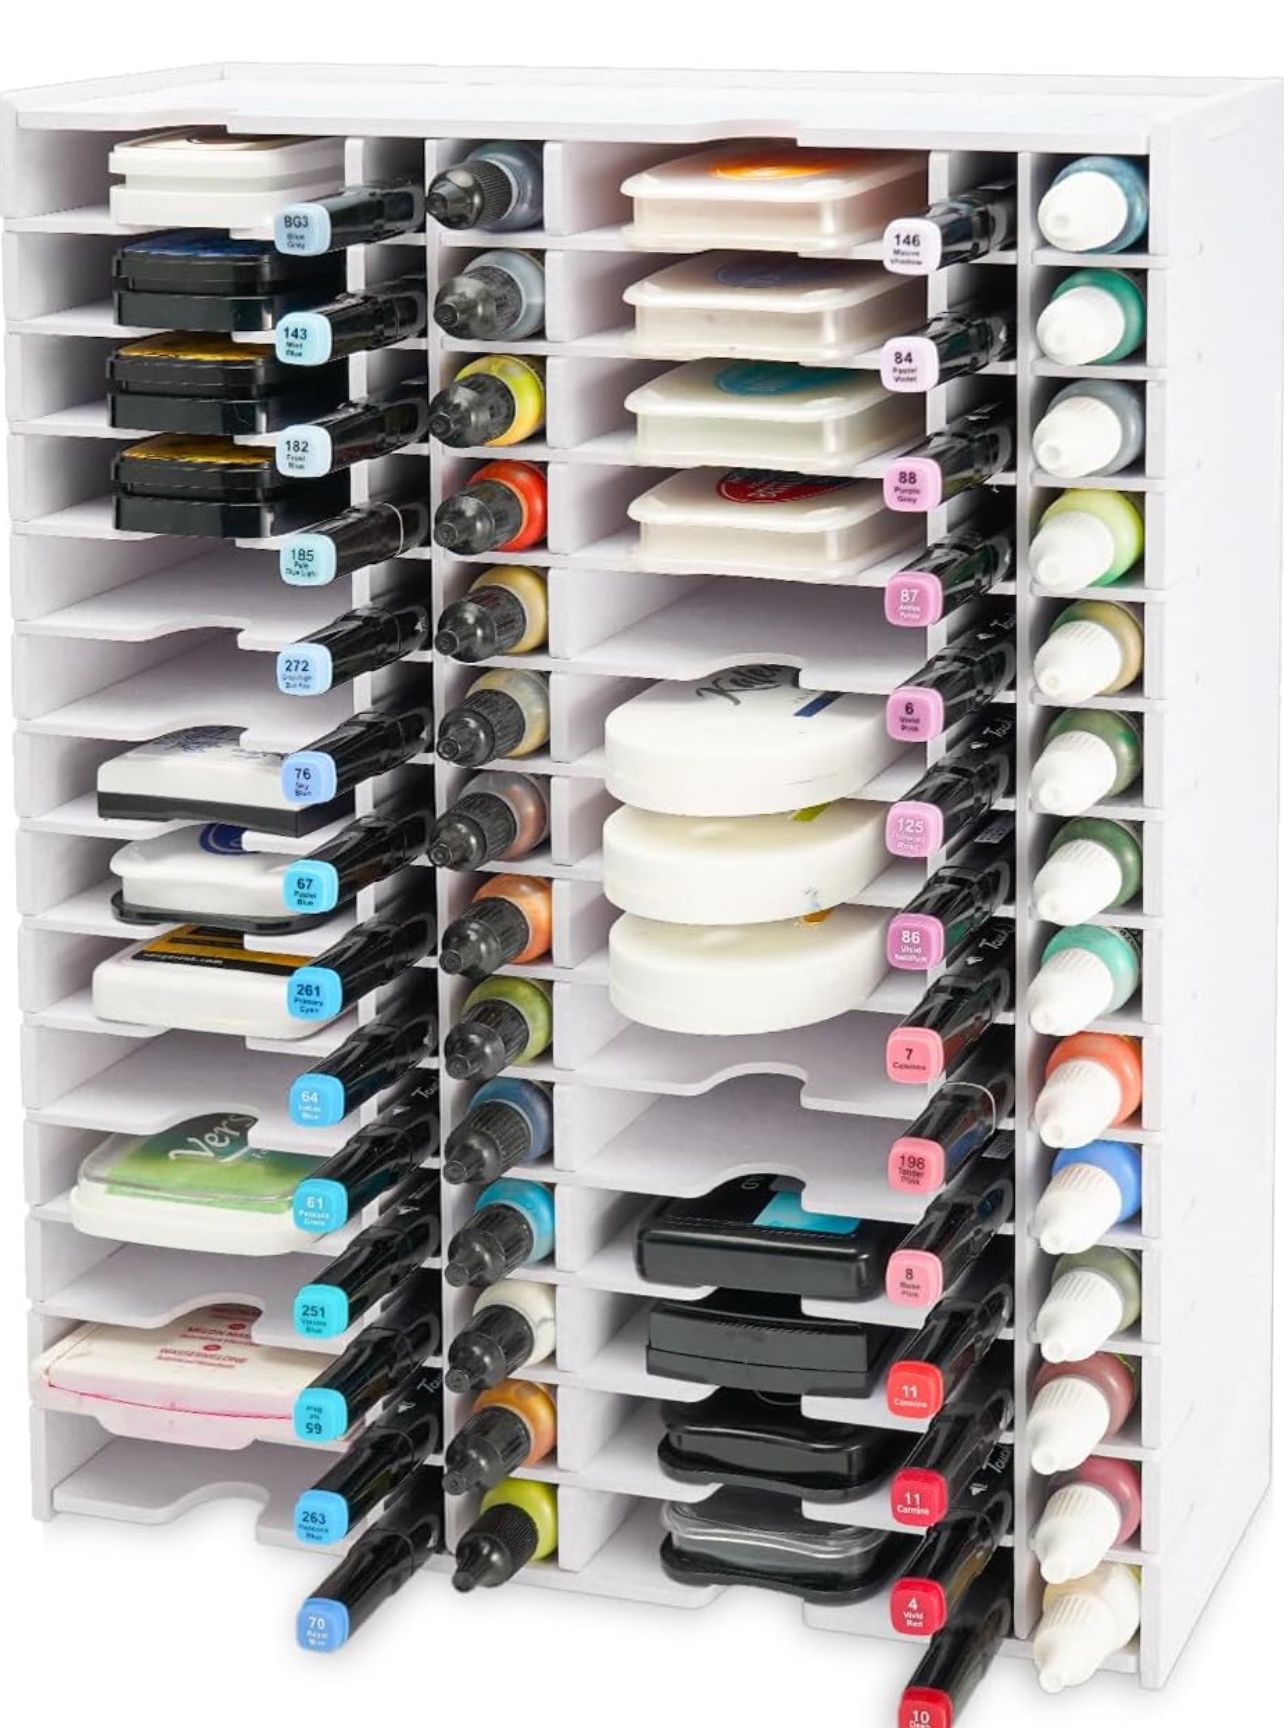 Krafetto Combined storage shelf of ink pads, 28 grids for ink pads, 28 grids for markers, 28 grids for ink refill, organizer